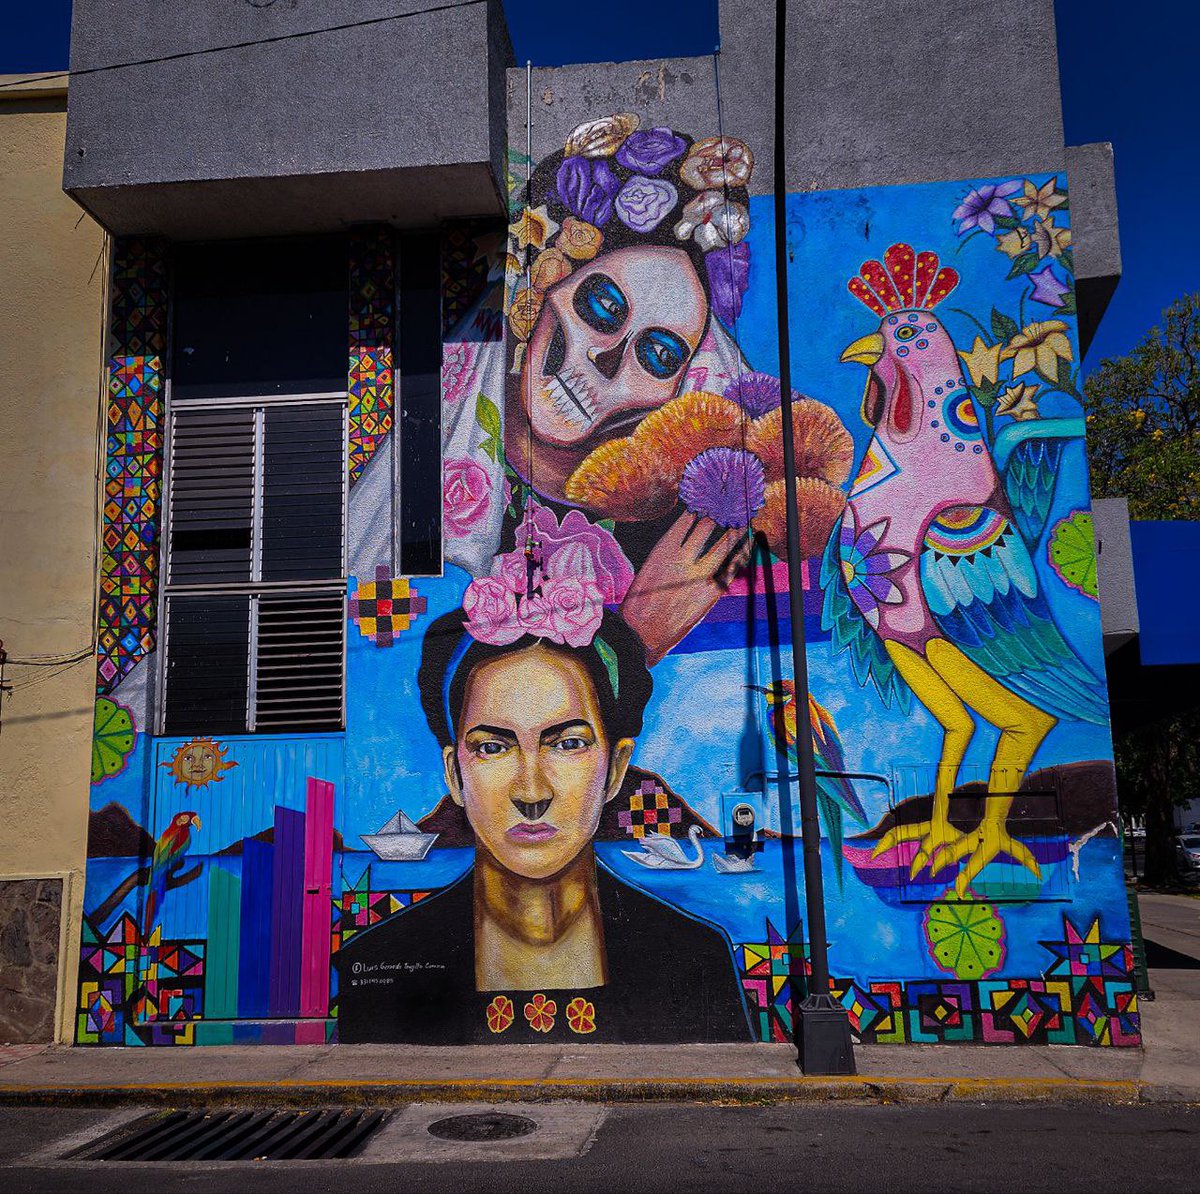 “Árbol de la esperanza, mantente firme”. #FK
📍 Guadalajara, Jalisco
#Murales #ArteUrbano
#Art  #streetart #streetartdaily #streetartphoto #Photography #Creativity #MultiColored #FridaKahlo